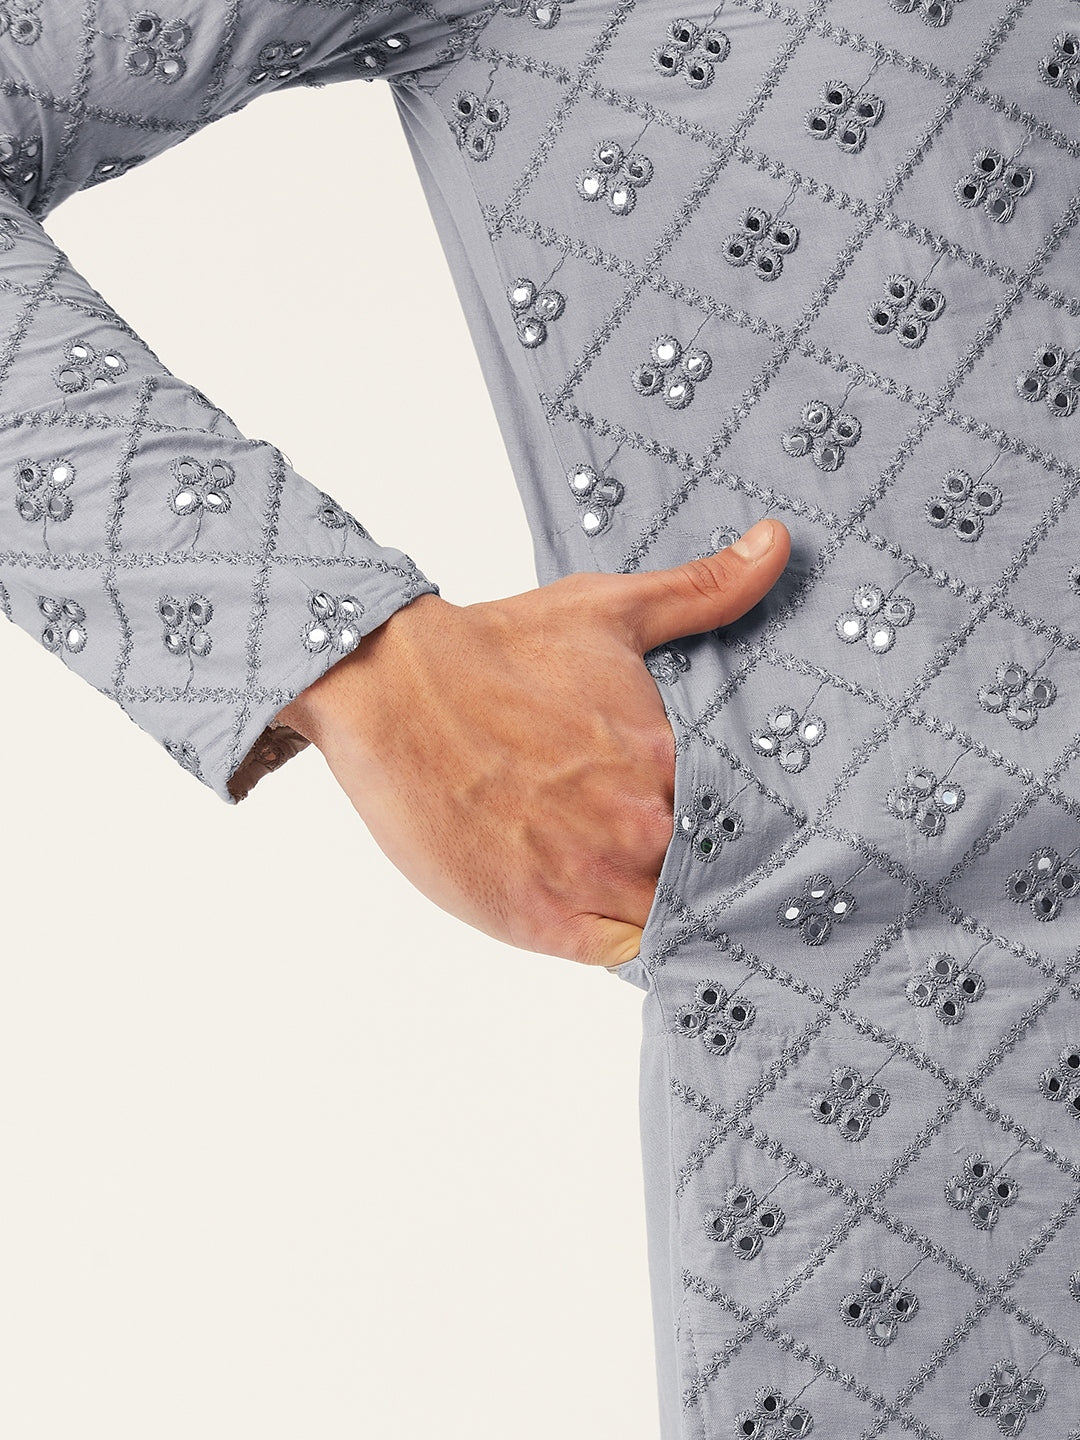 Men's Grey Embroidered Mirror Work Kurta Pyjama ( JOKP 646 Grey ) - Virat Fashions